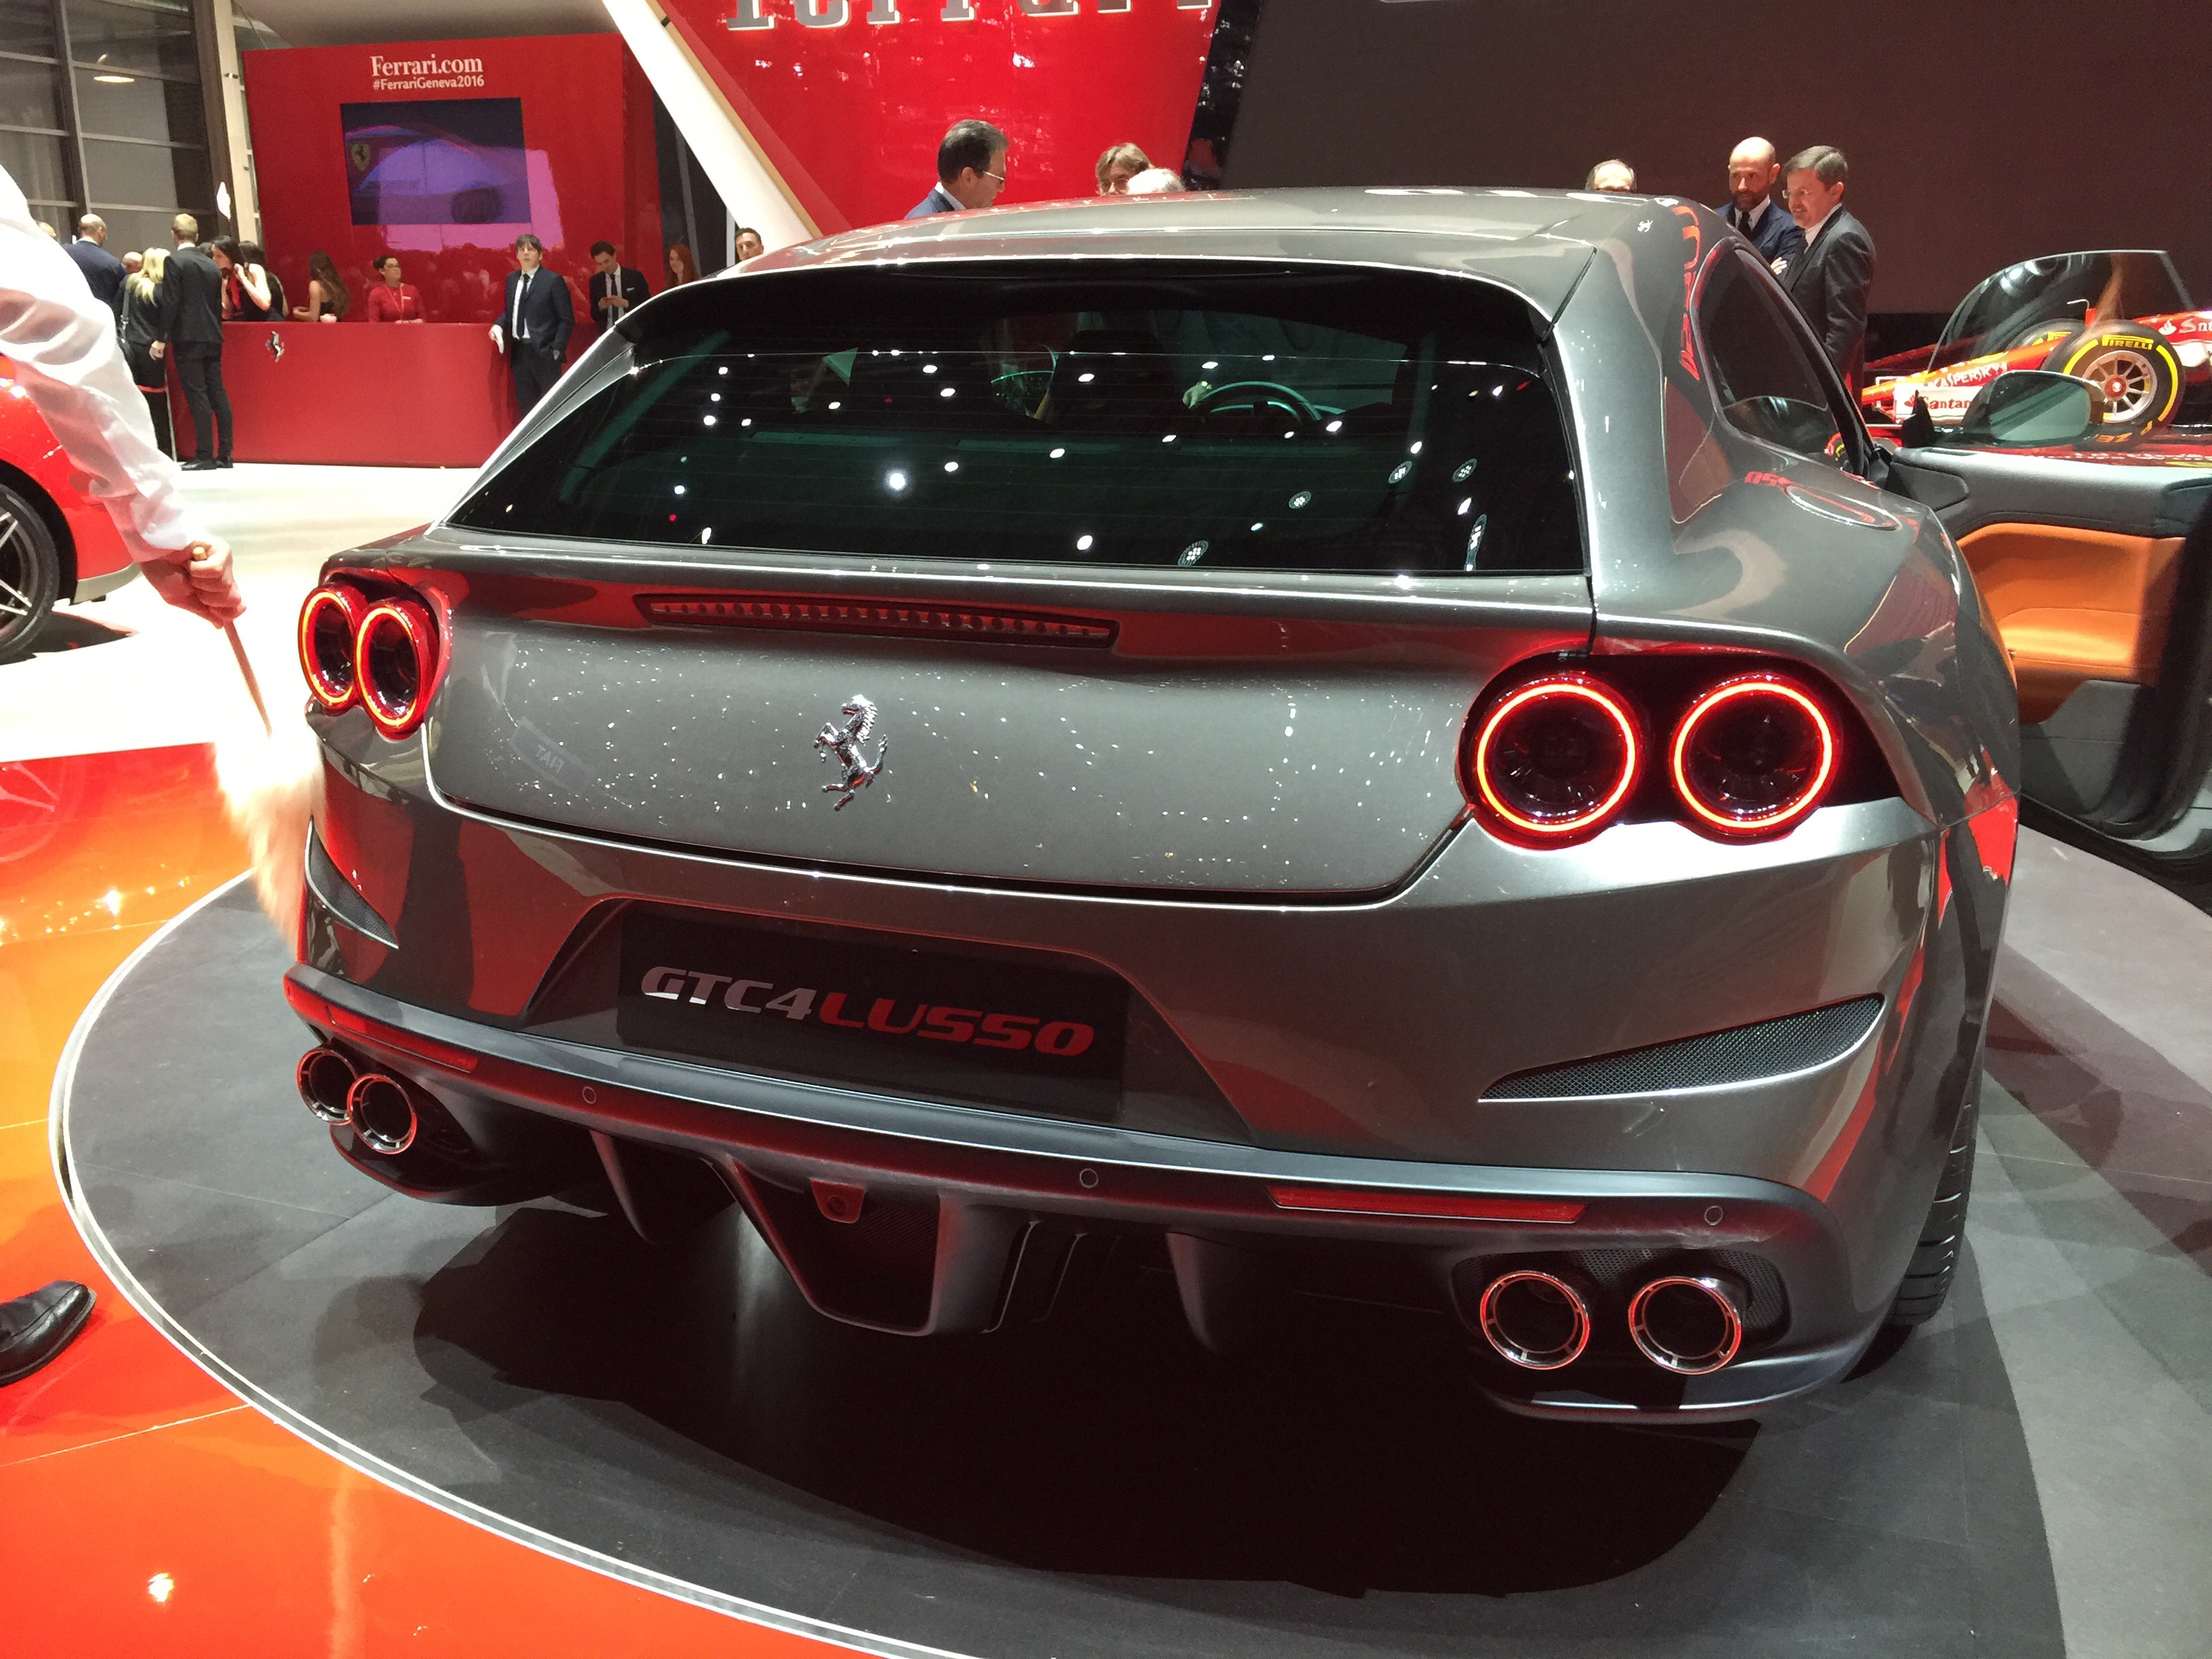 Ferrari GTC4lusso mod photo